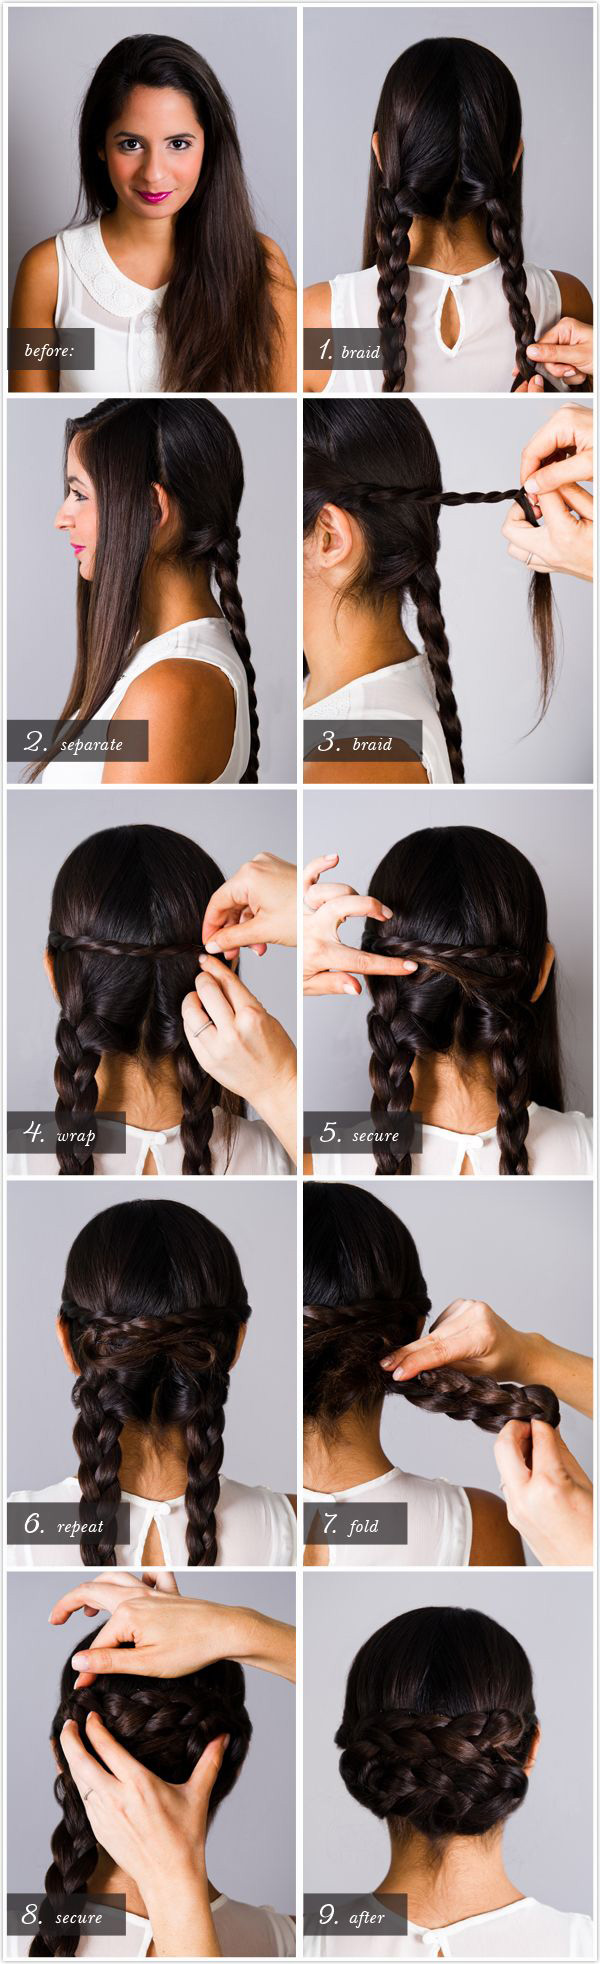 7 easy hair styles for greasy hair